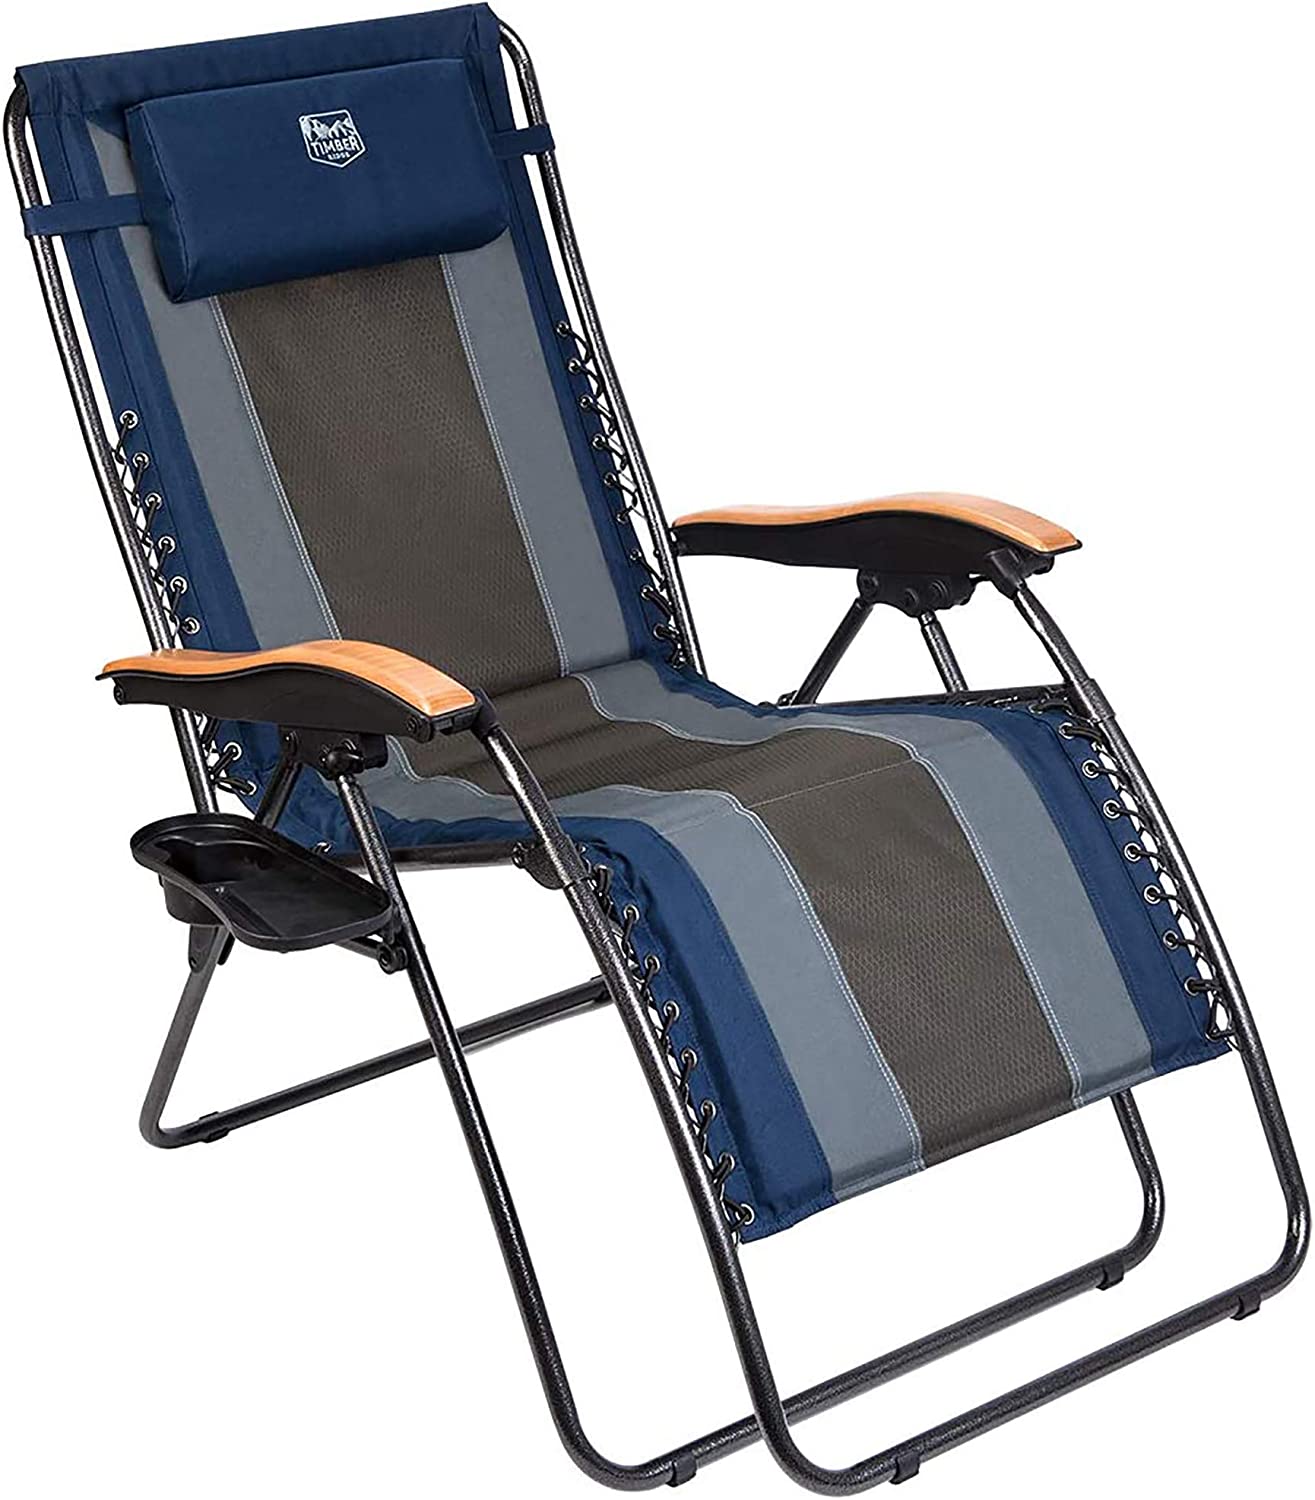 Timber Ridge Anti-Gravity Lumbar Support Lawn Chair